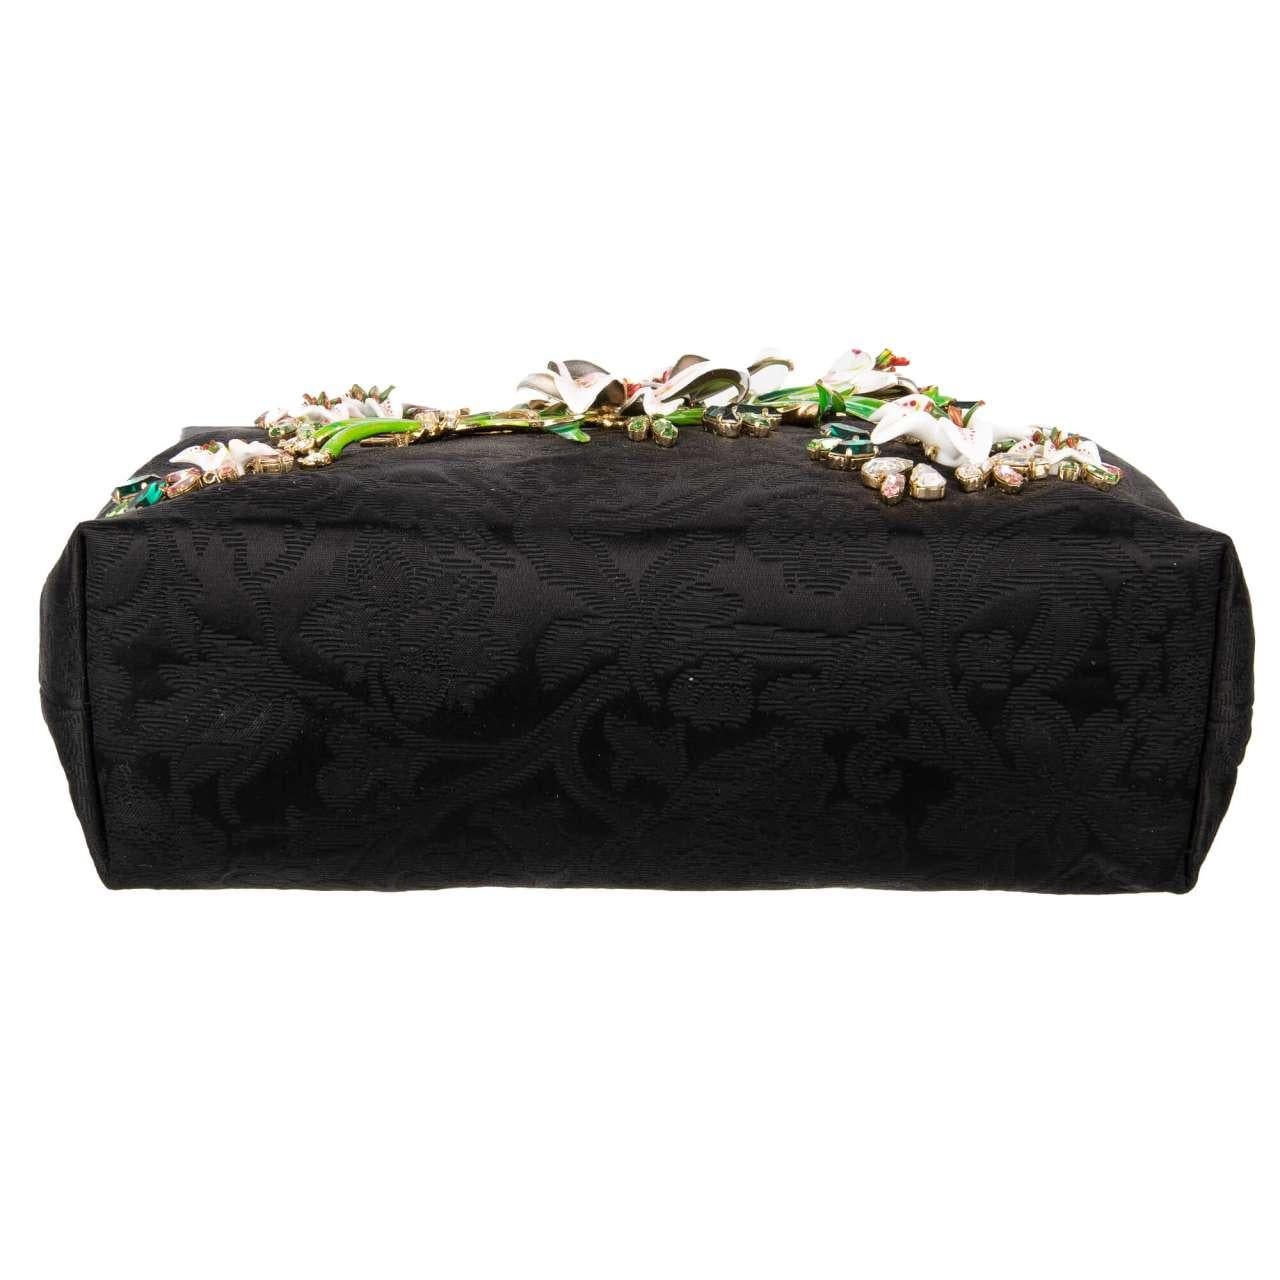 D&G - Lily Brocade Crystal Chain Snakeskin Evening Clutch Bag VANDA Black For Sale 5